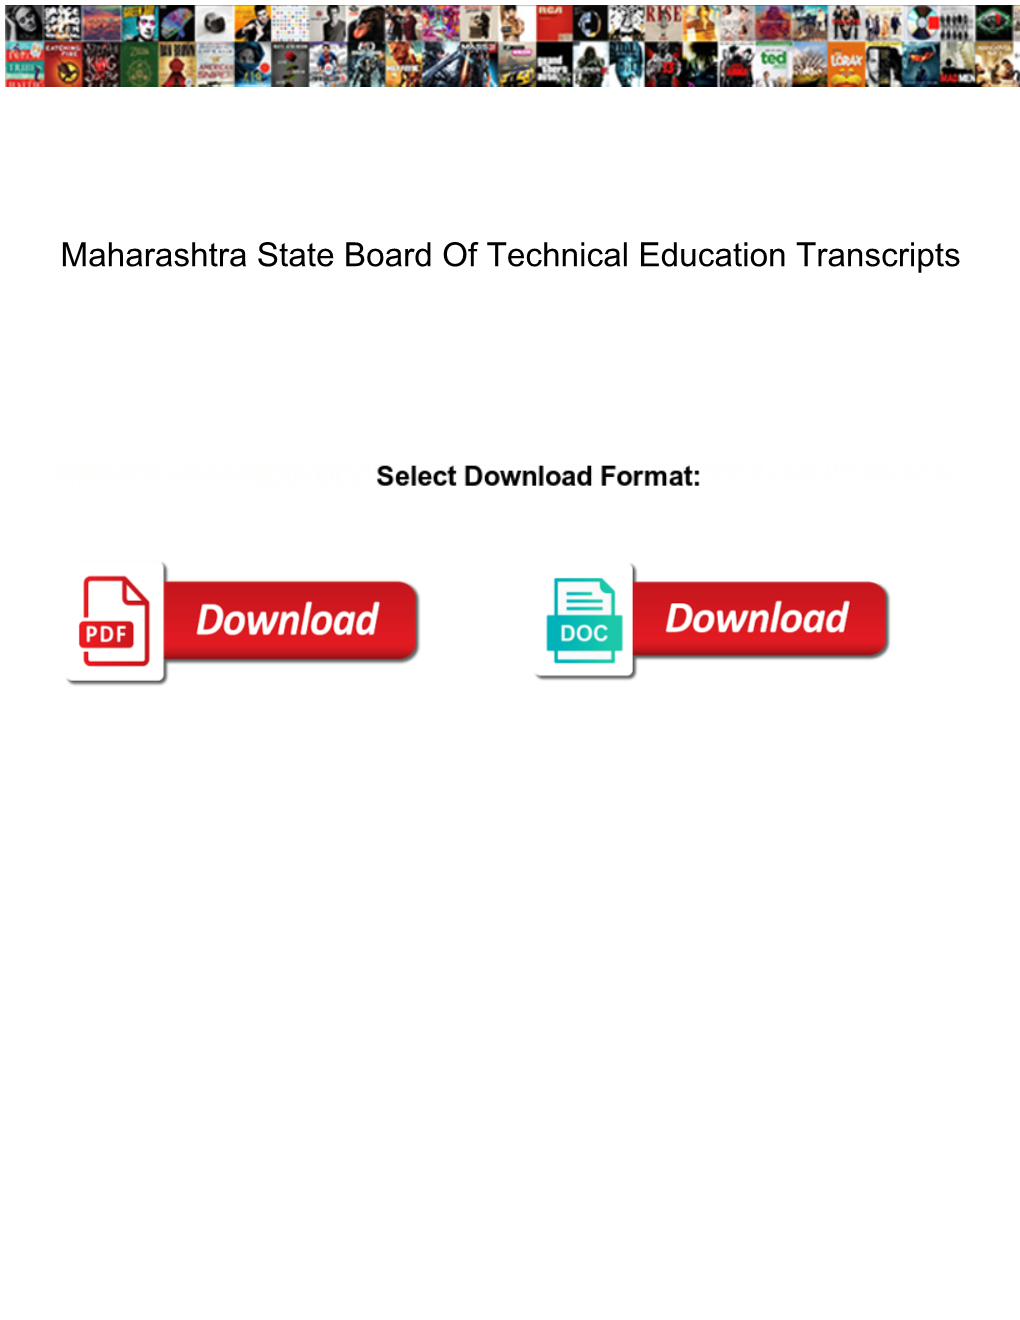 Maharashtra State Board of Technical Education Transcripts